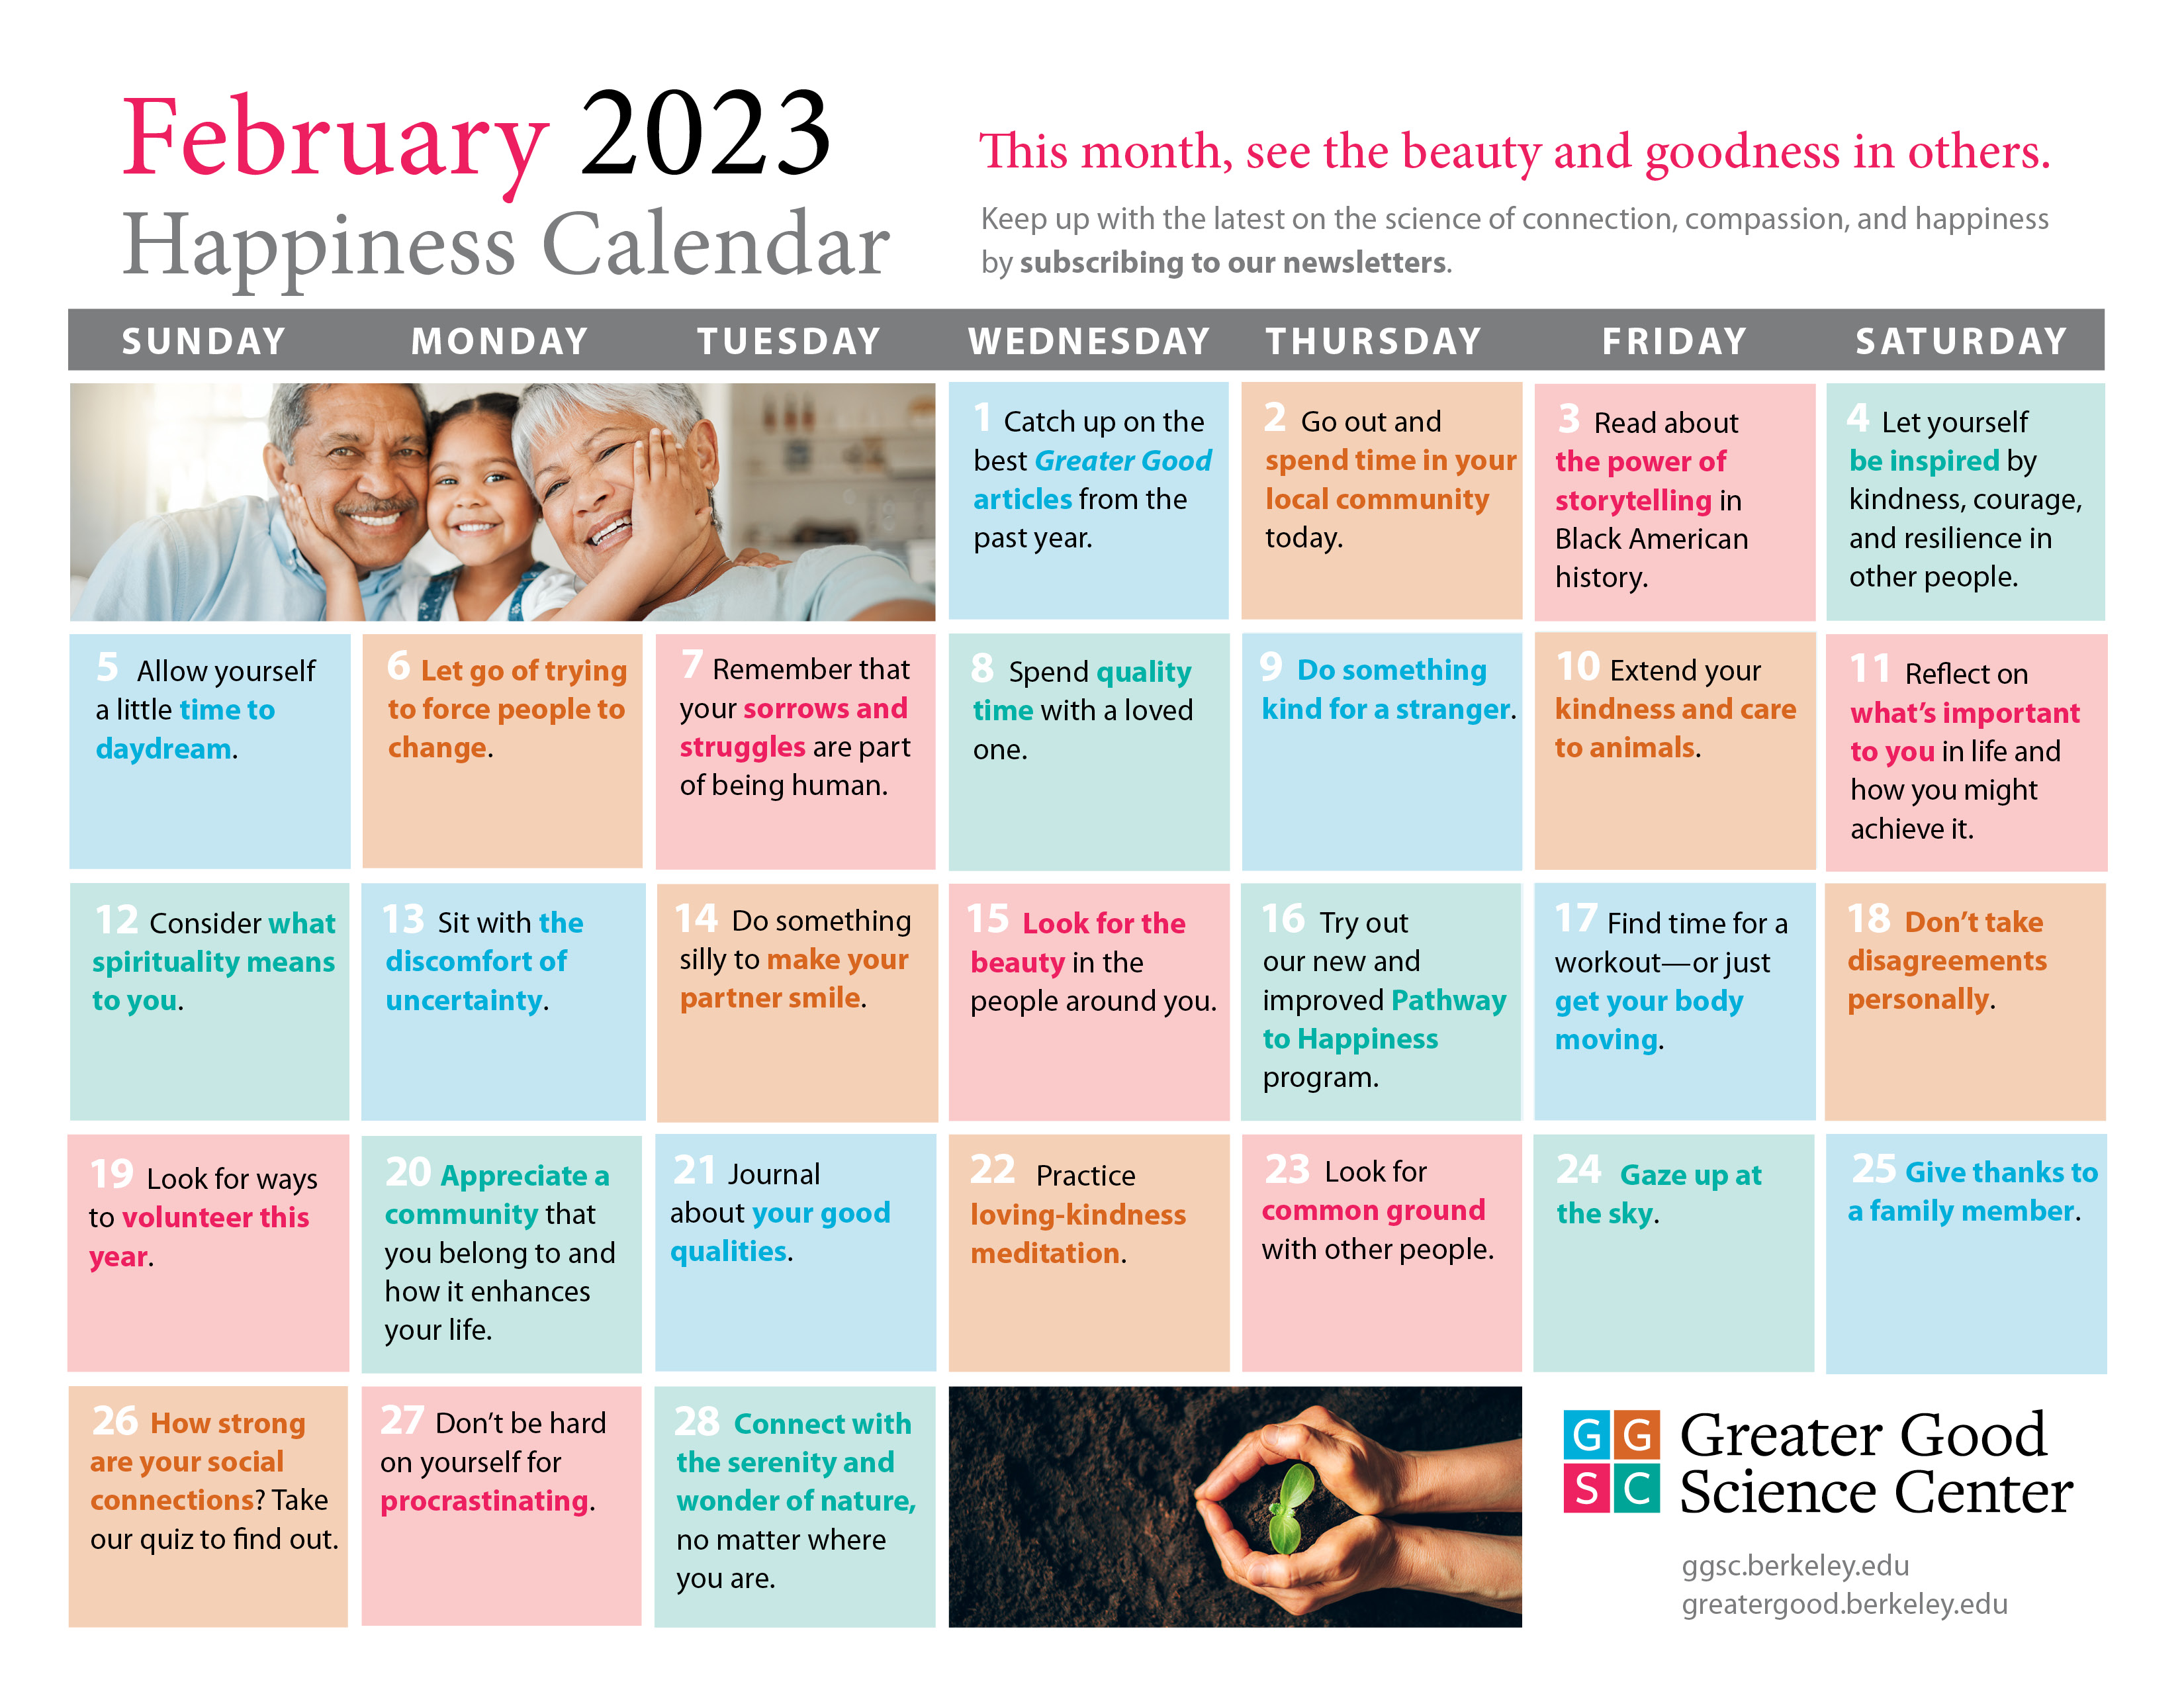 February 2023 happiness calendar